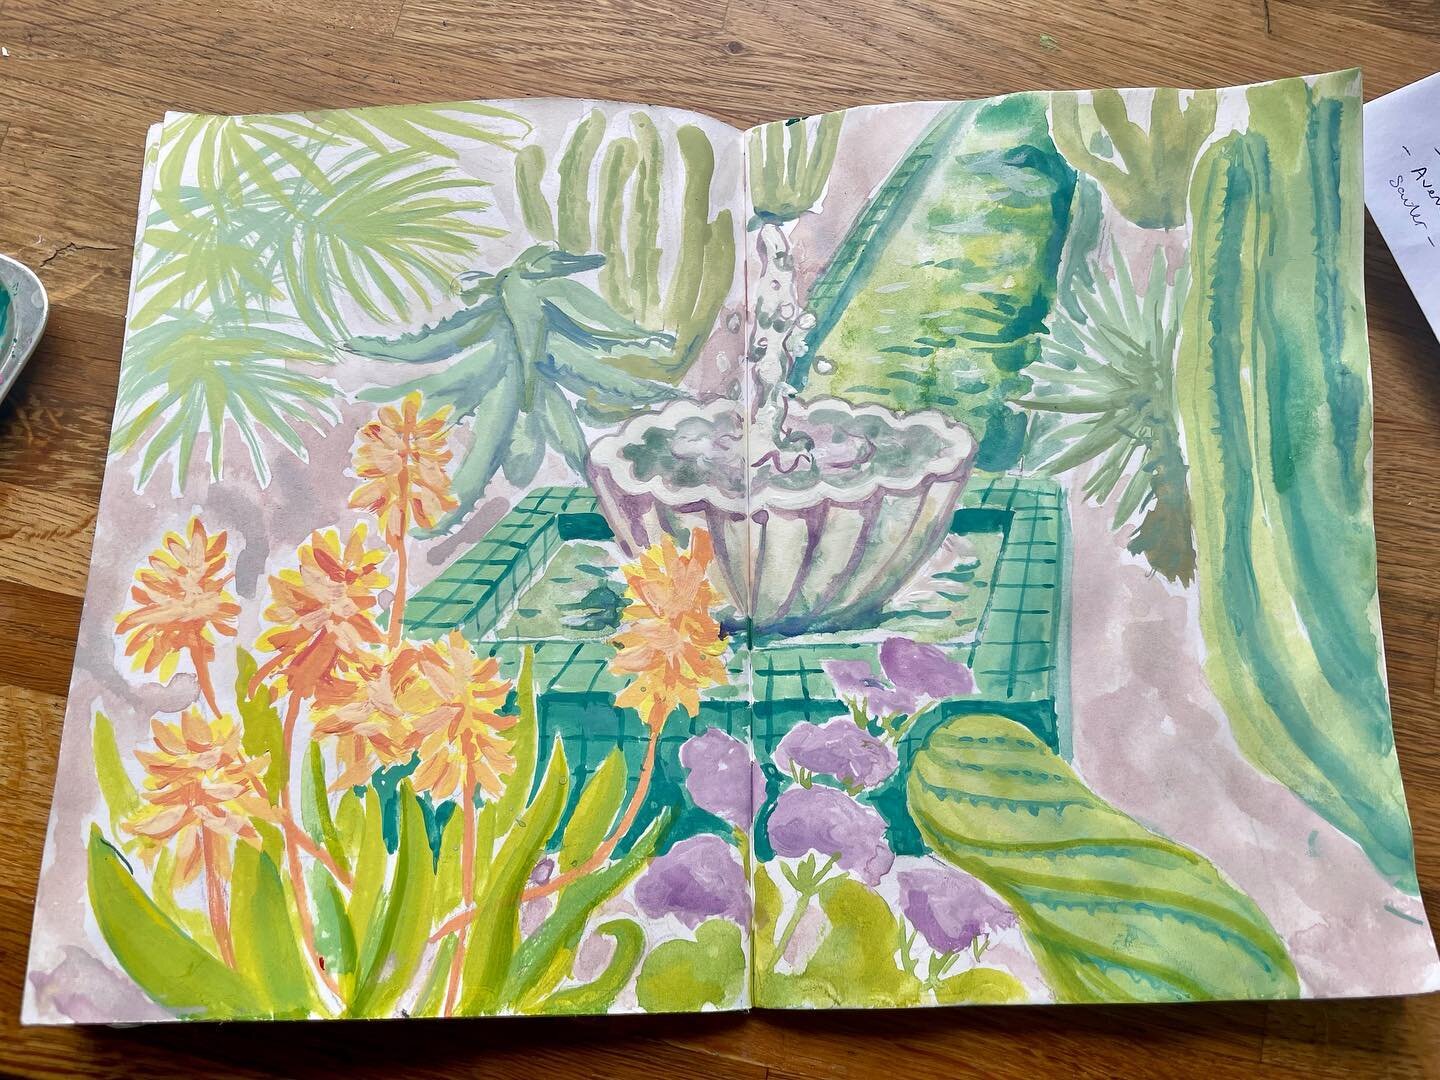 .
.
.
.
.
#sketchbook #drawinggardens #gouache #plants #drawingplants #succulents